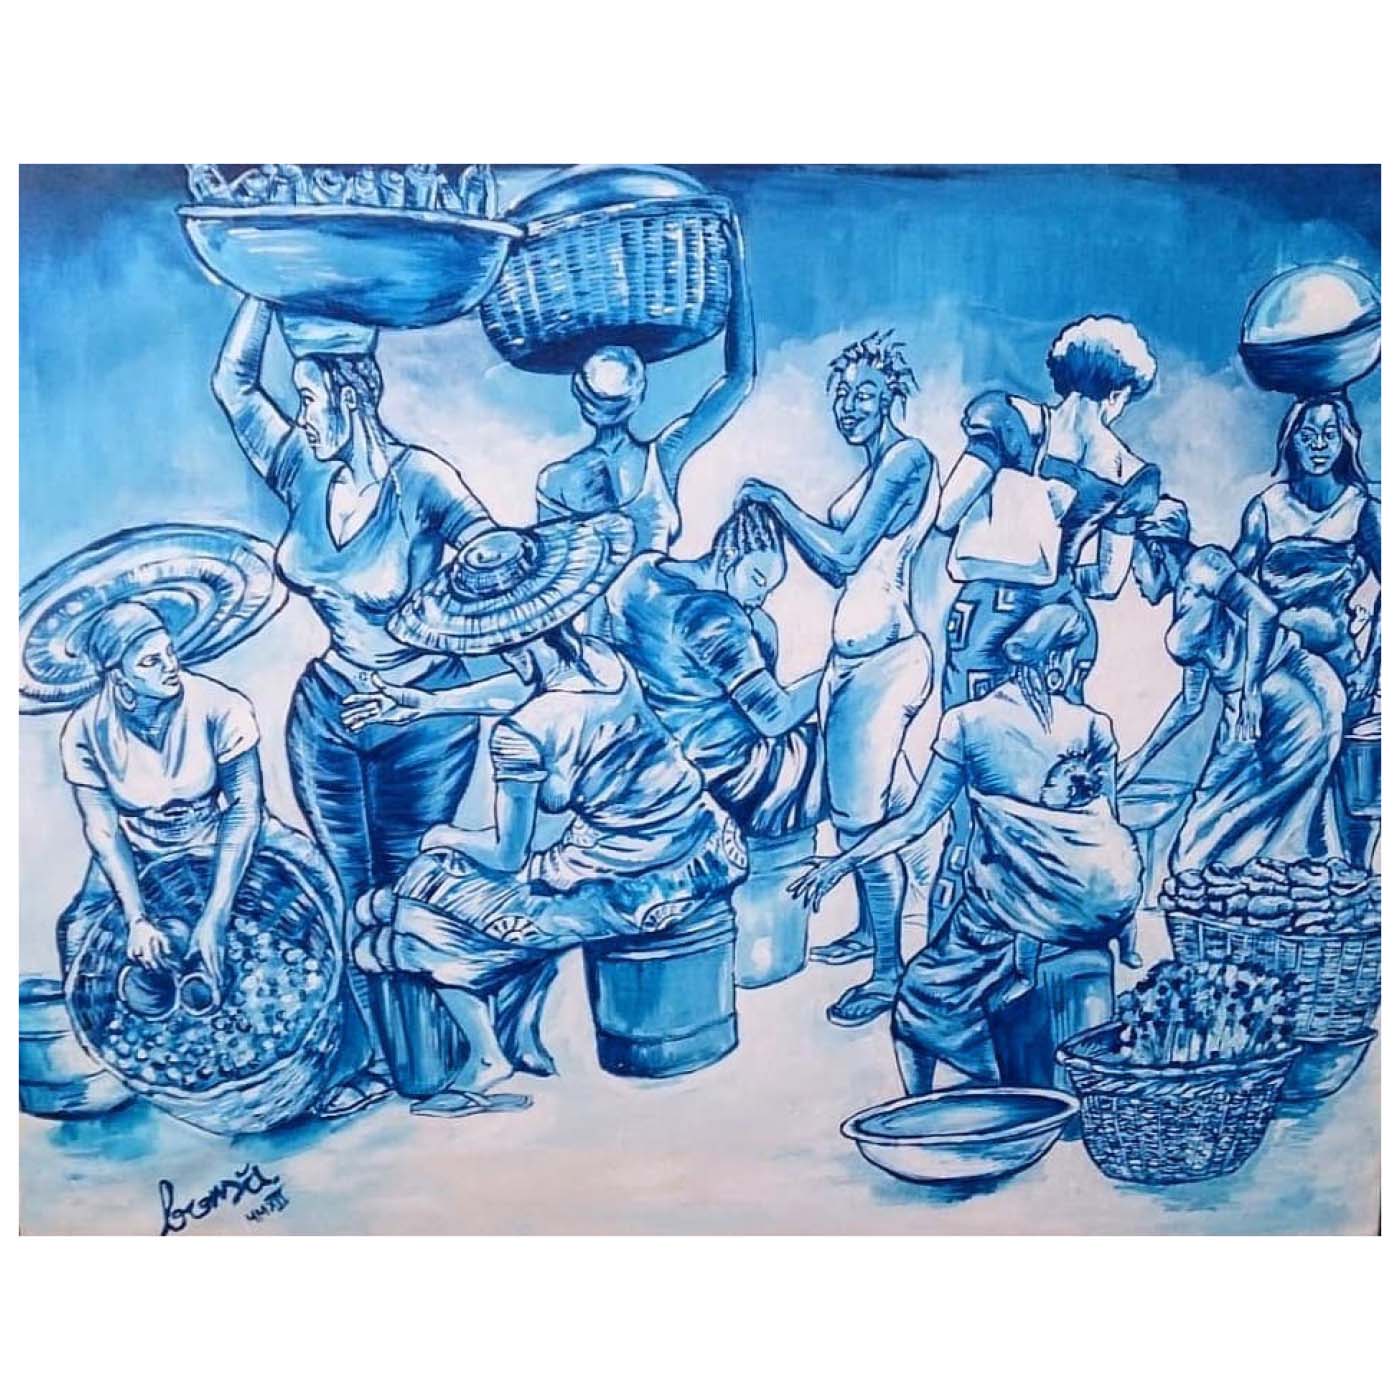 Boma Nnaji painting of African women